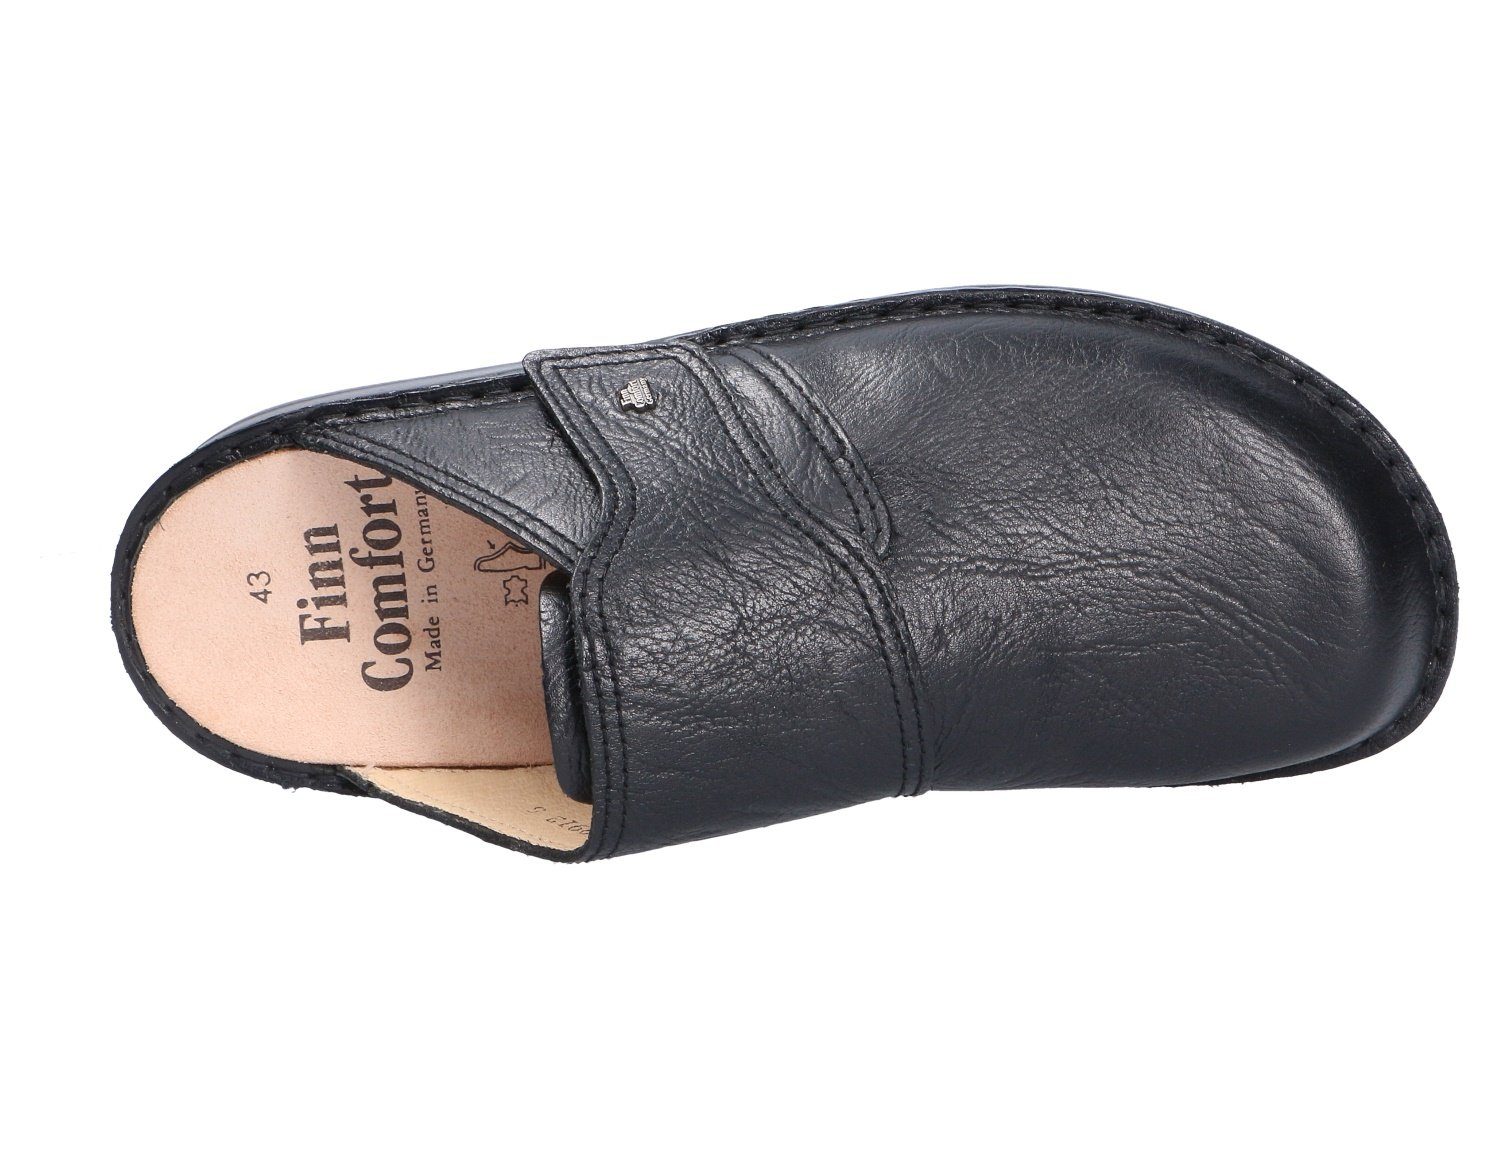 Finn Pantolette Qualität Comfort black Hochwertige